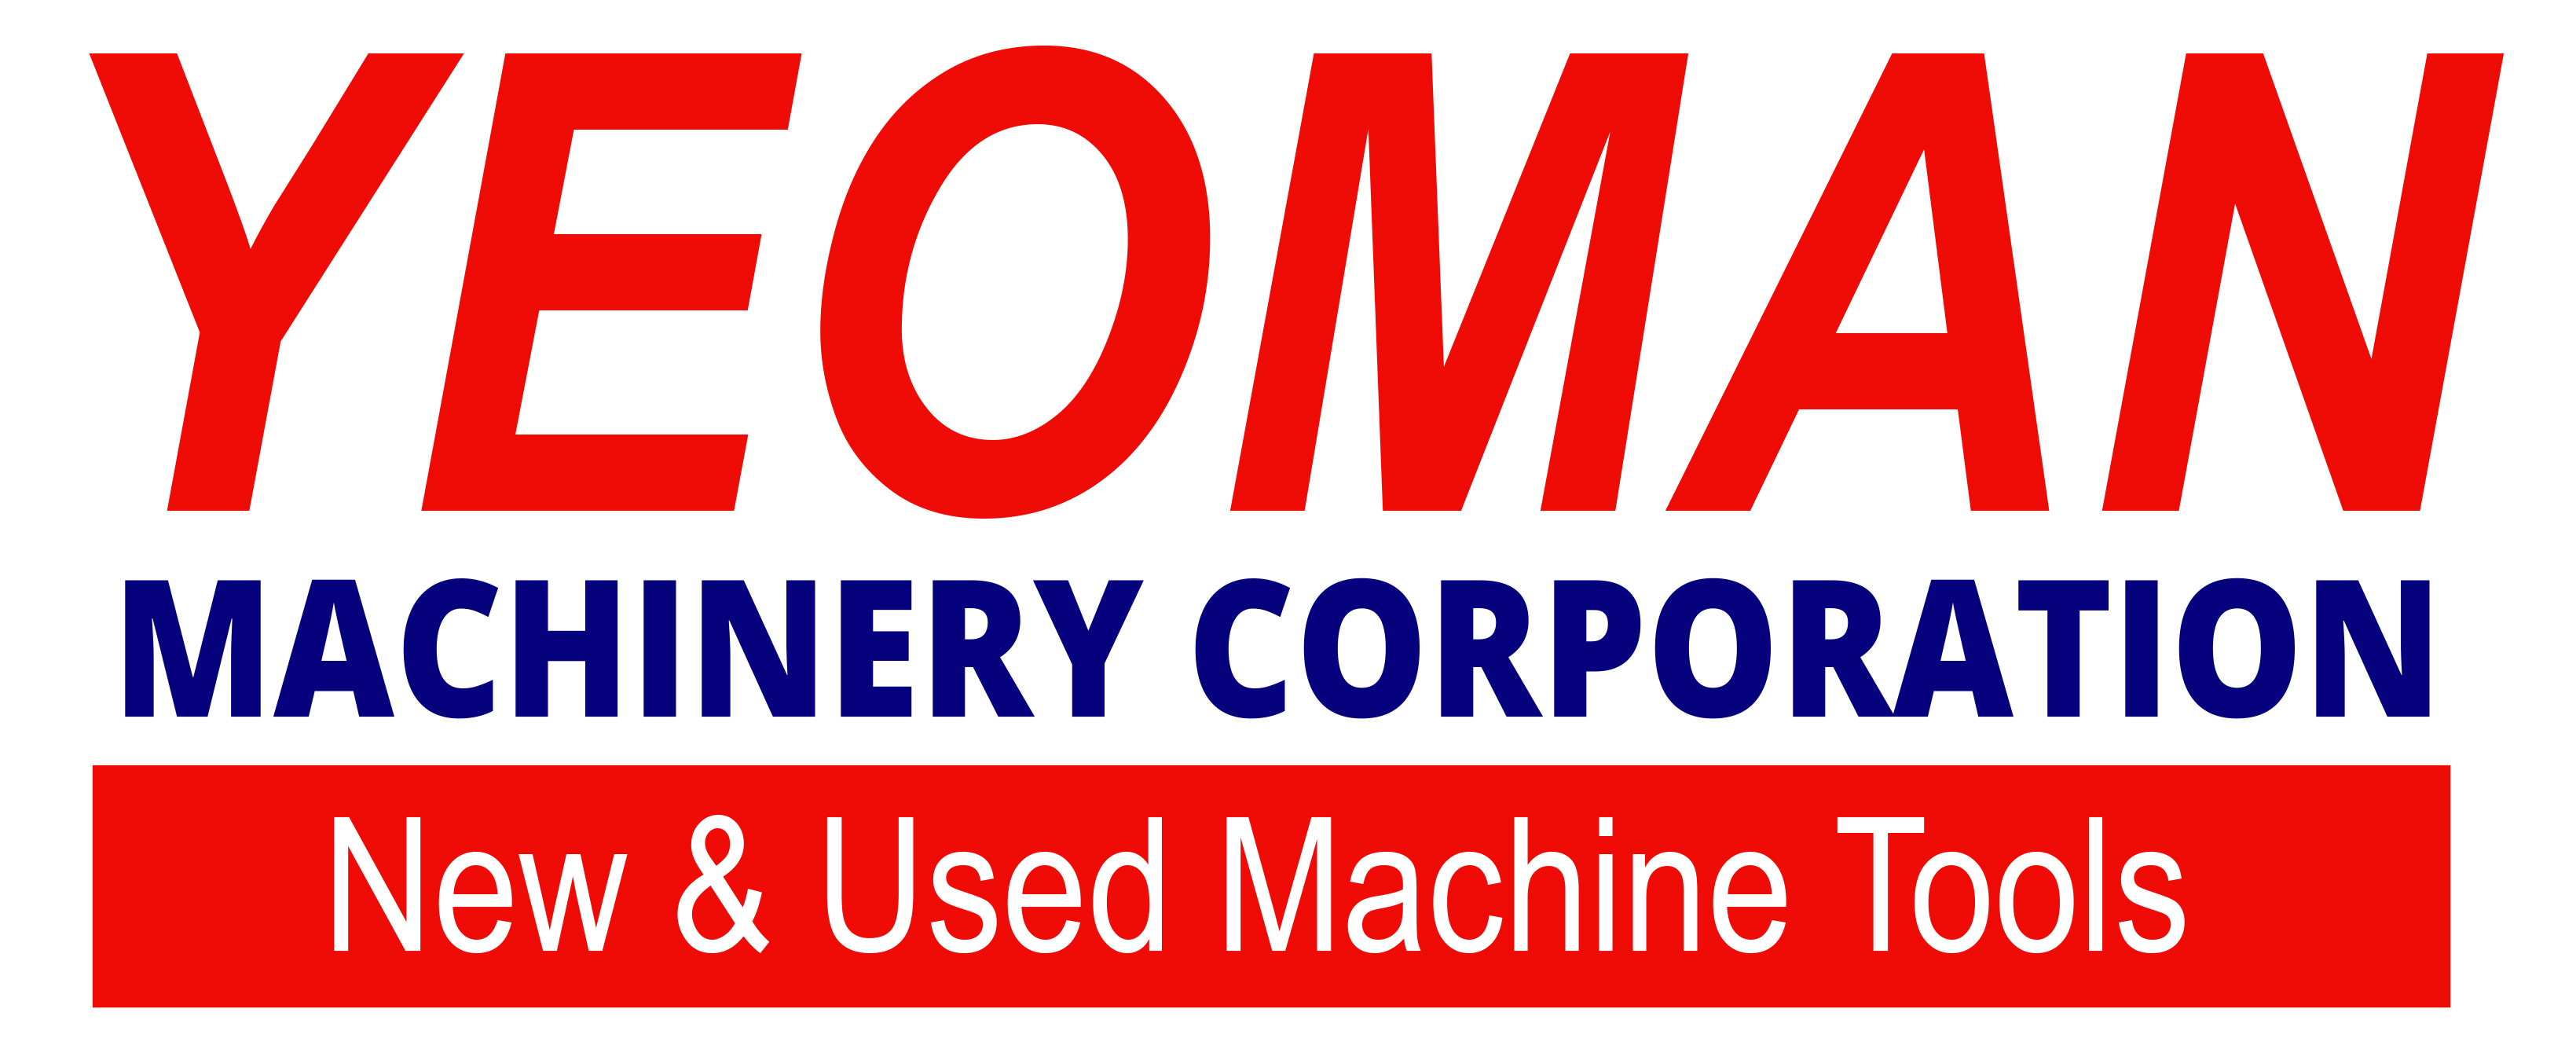 Yeoman Machinery Corporation